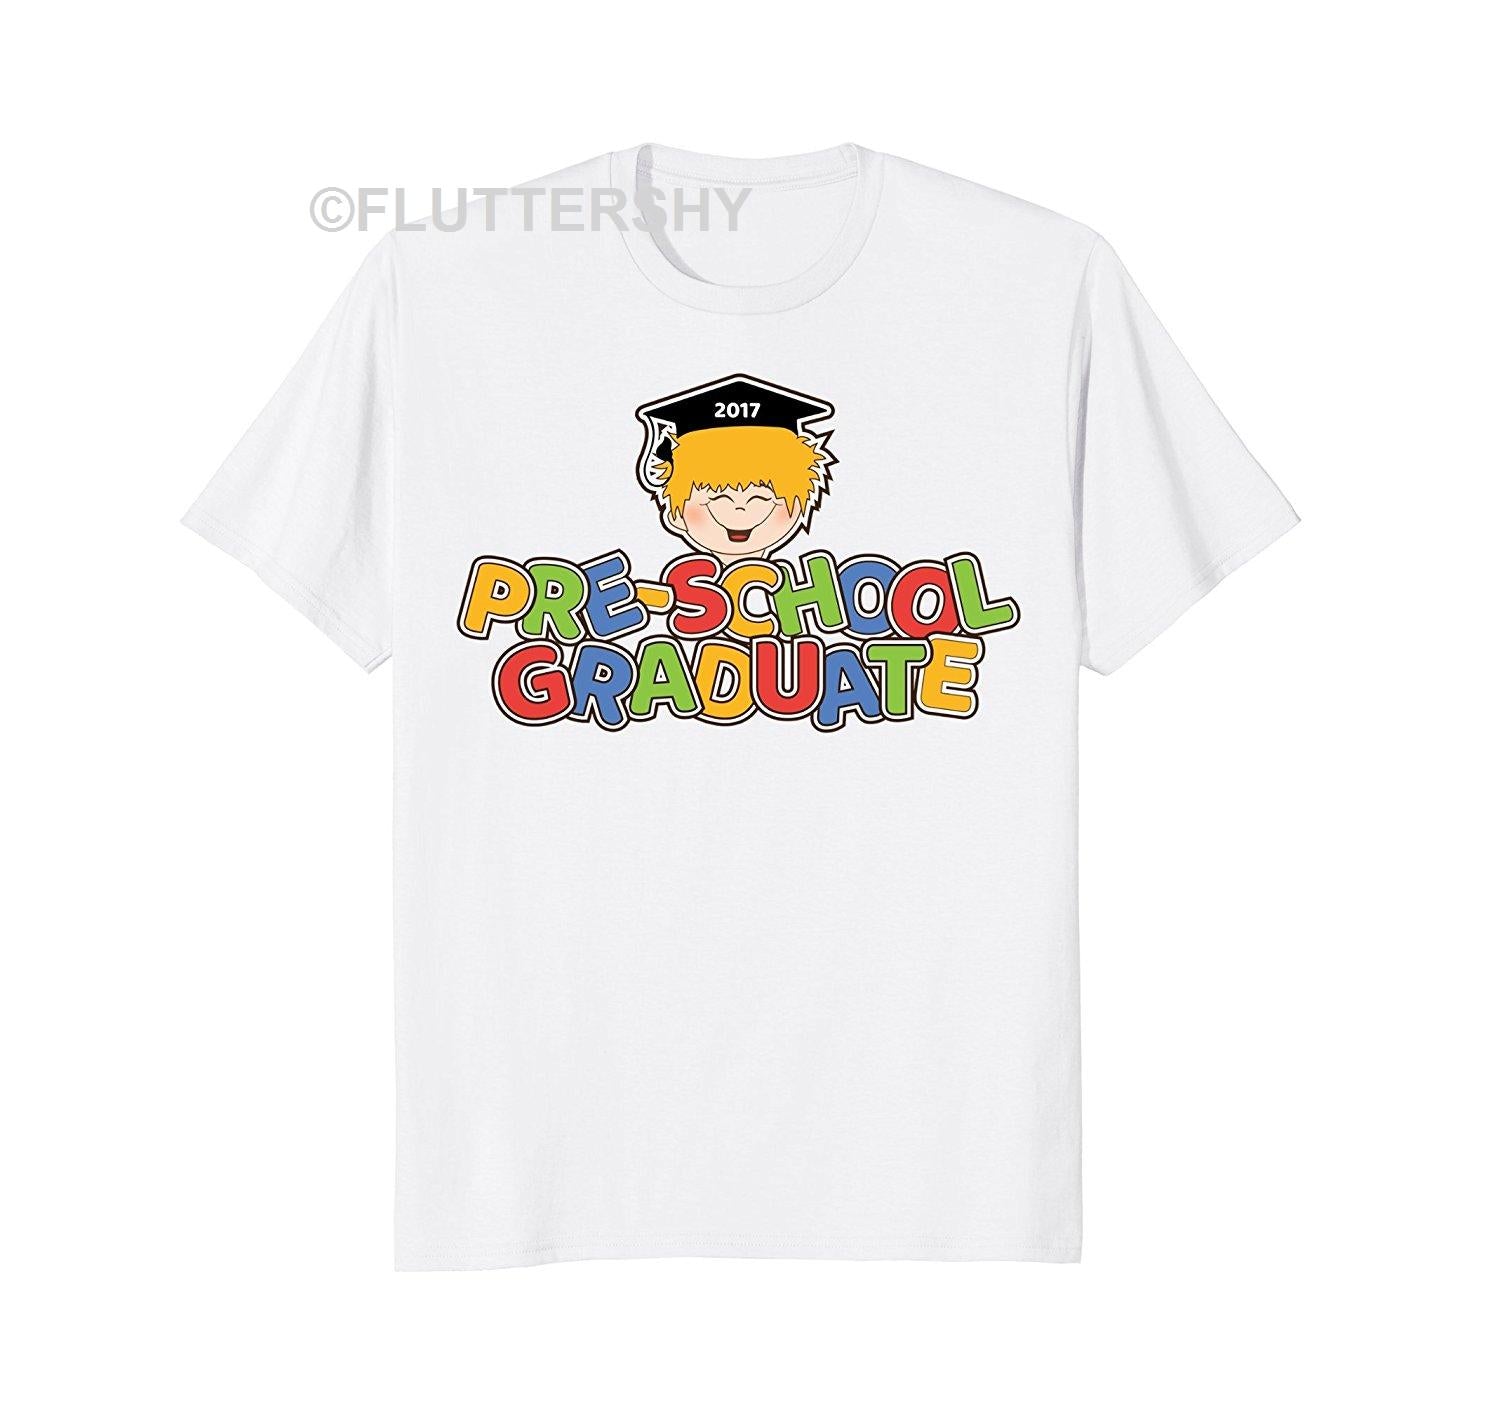 Trending Tees Get Here Adorable Preschool Graduate Shirt Blond Boy Gift